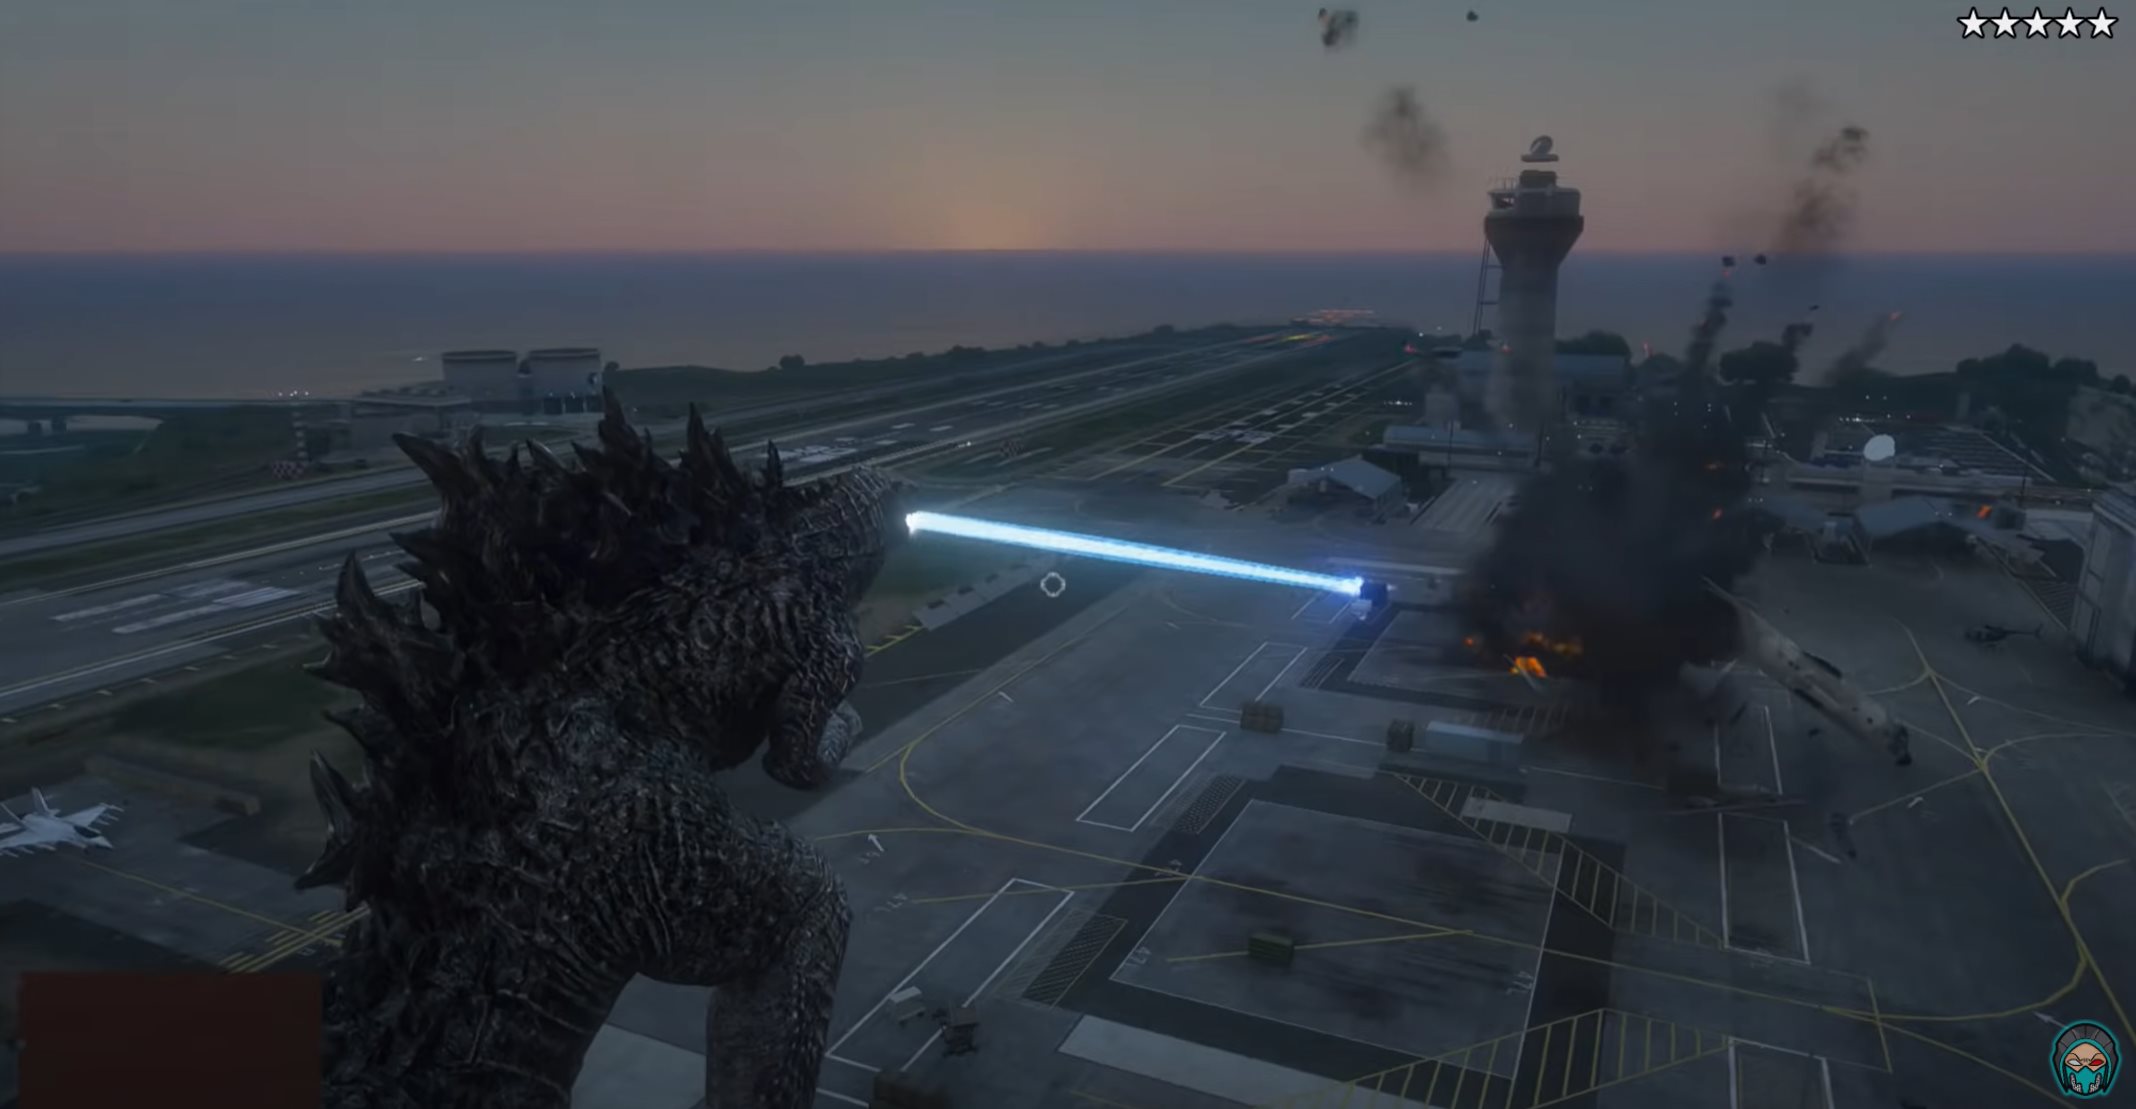 Insane Godzilla GTA 5 Mod Lets You Wreak Havoc in Los Santos